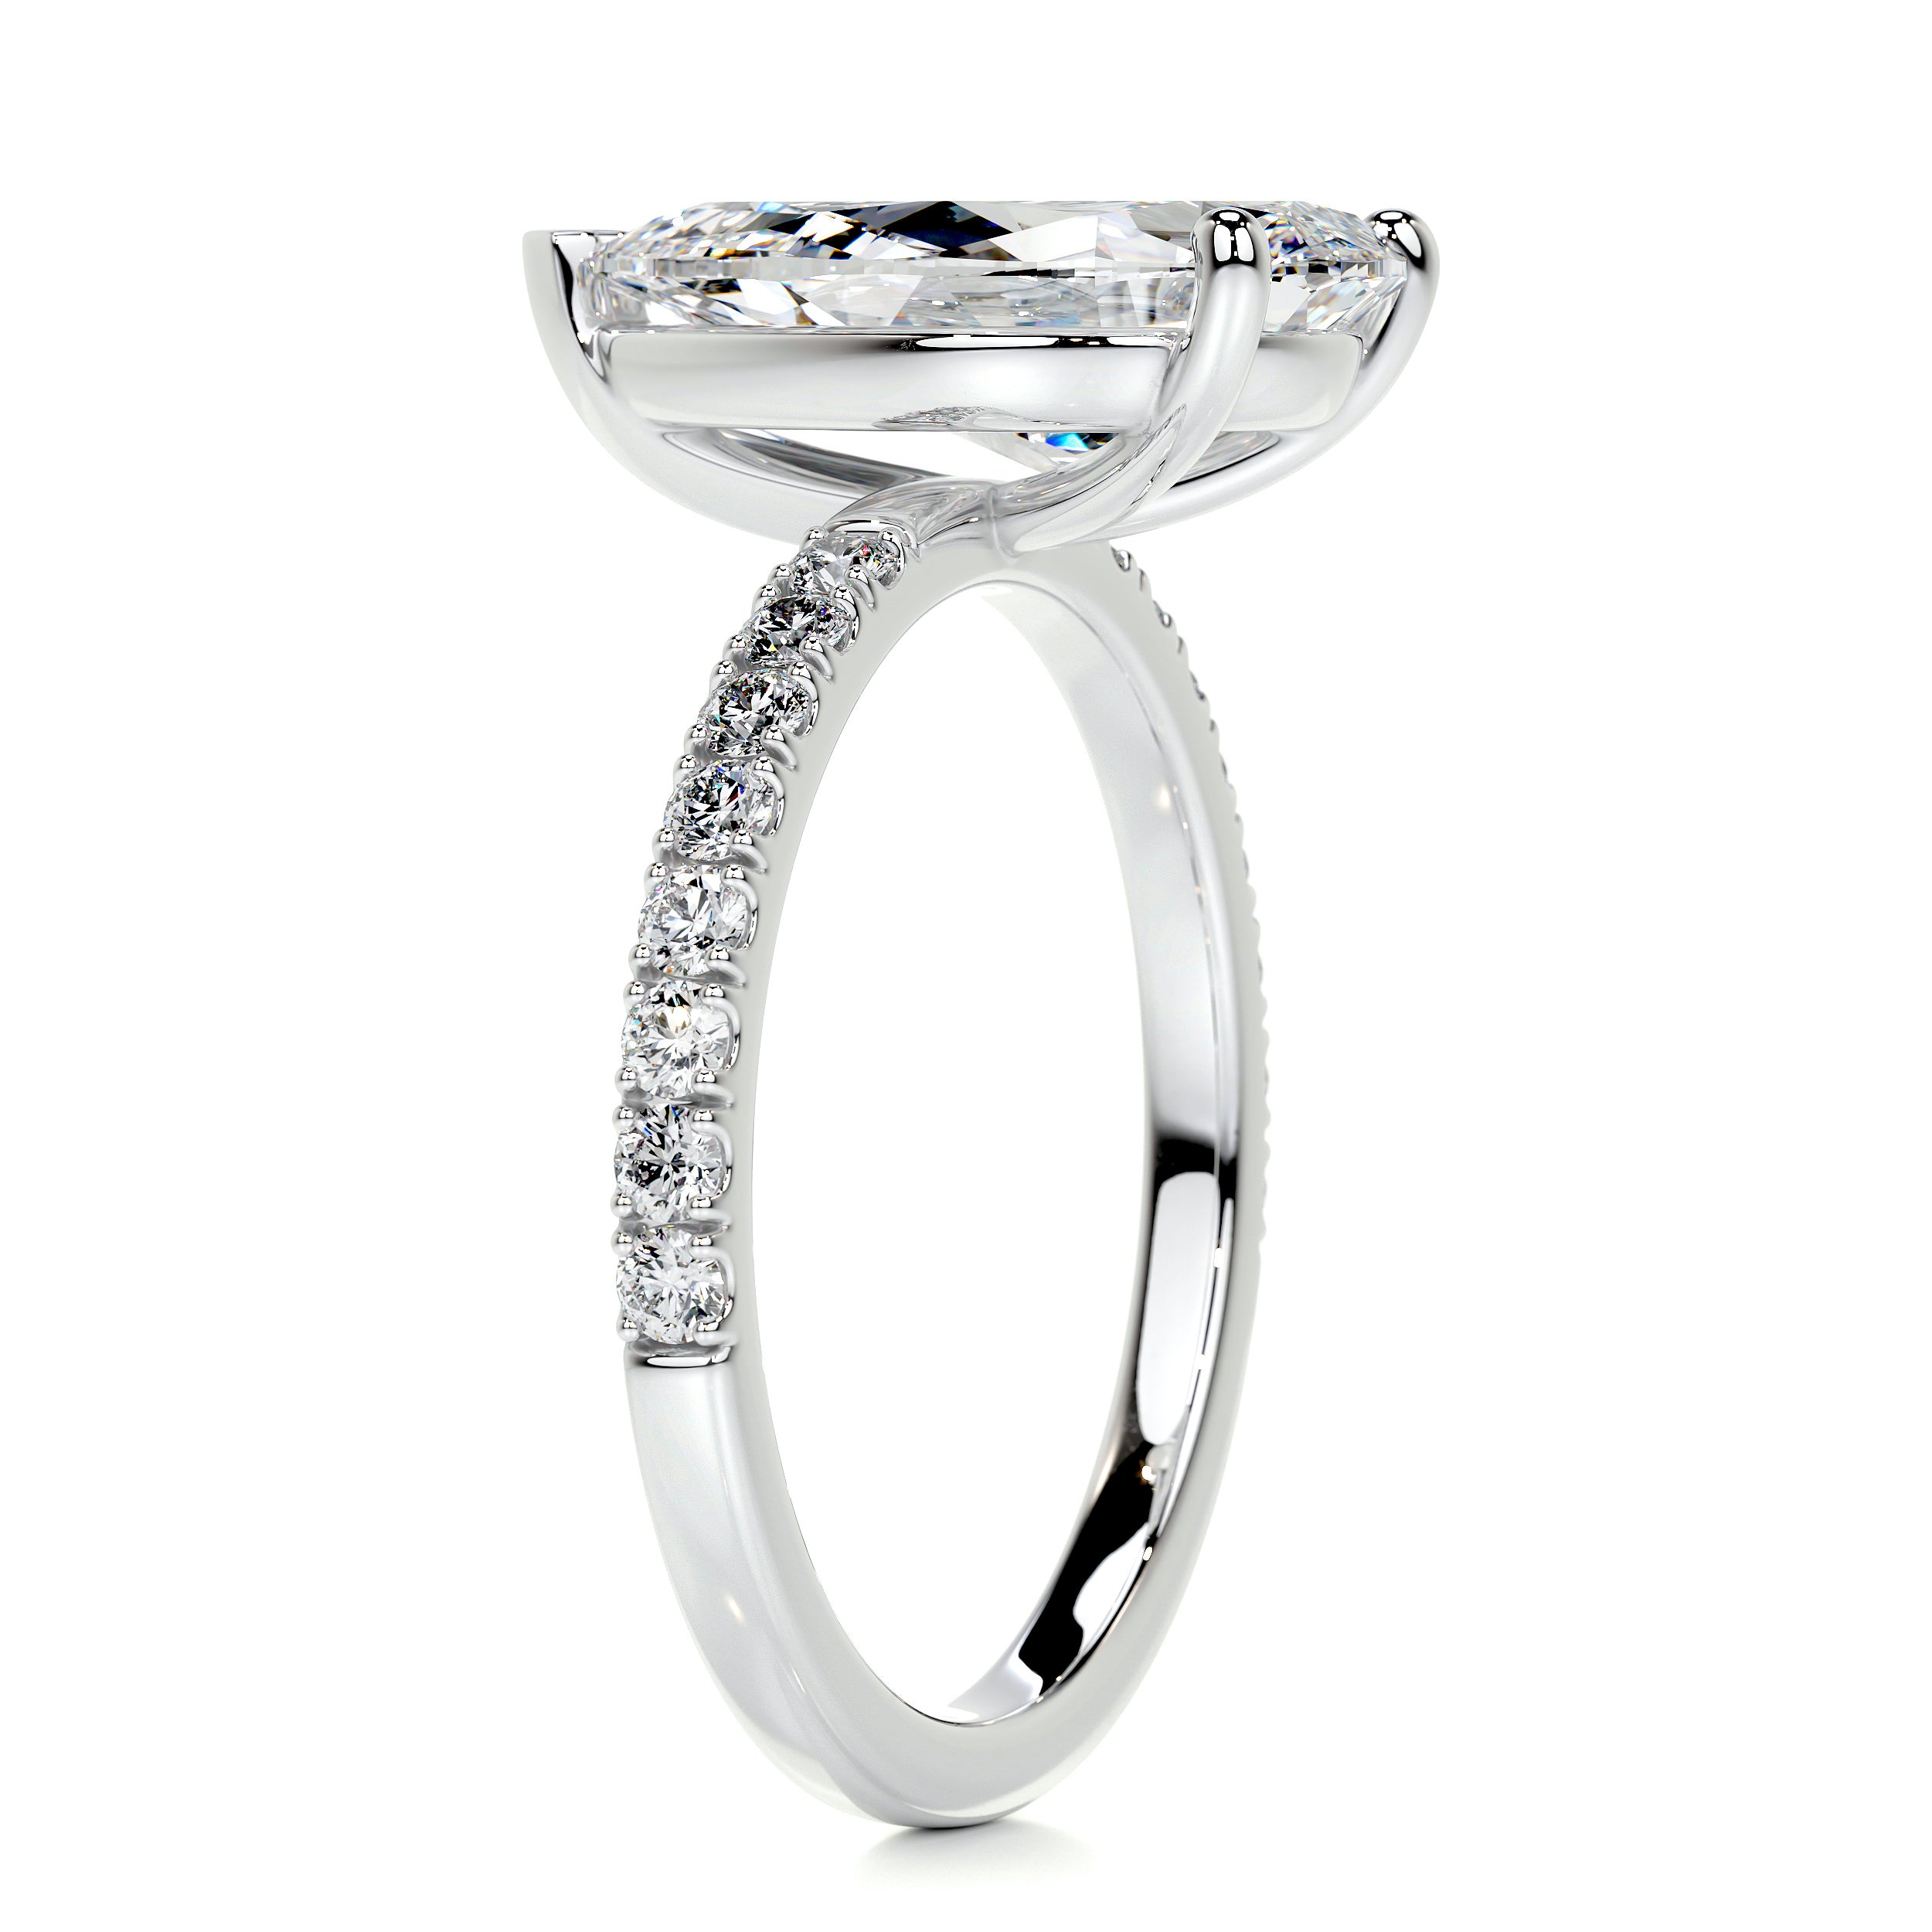 Jenny Diamond Engagement Ring   (5.5 Carat) -18K White Gold